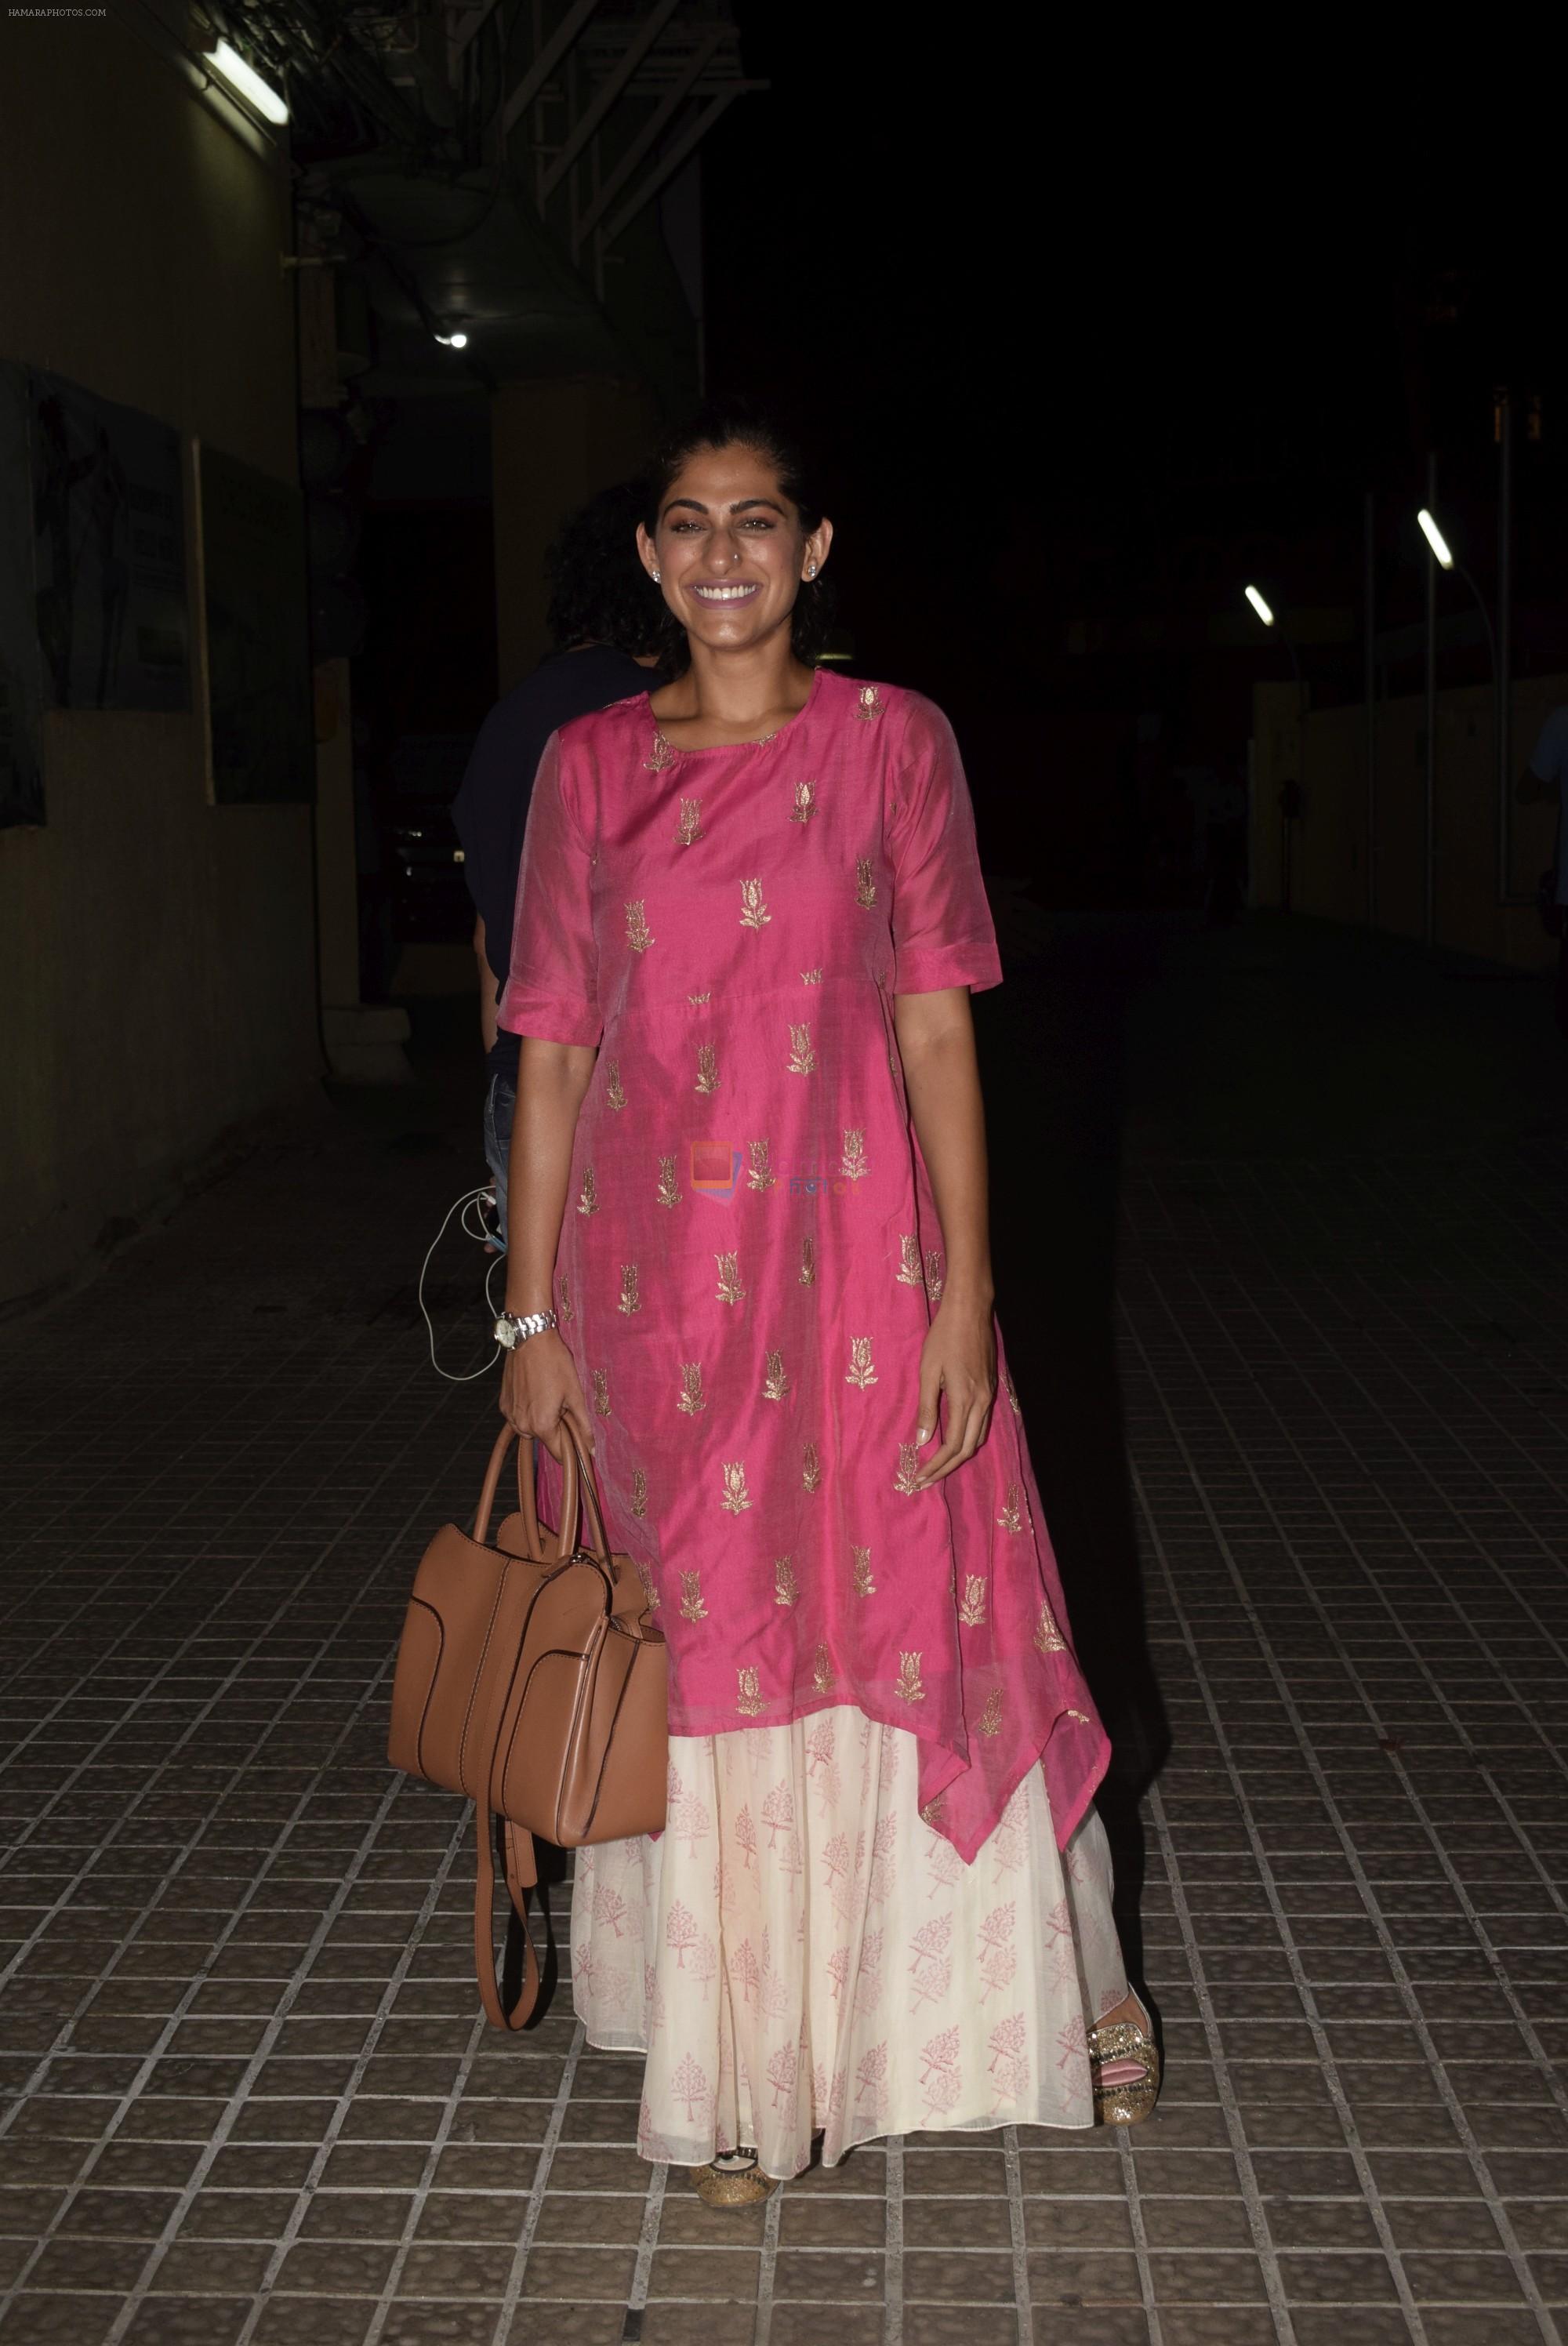 Kubbra Sait at the Screening of film Sonchiriya at pvr juhu on 27th Feb 2019